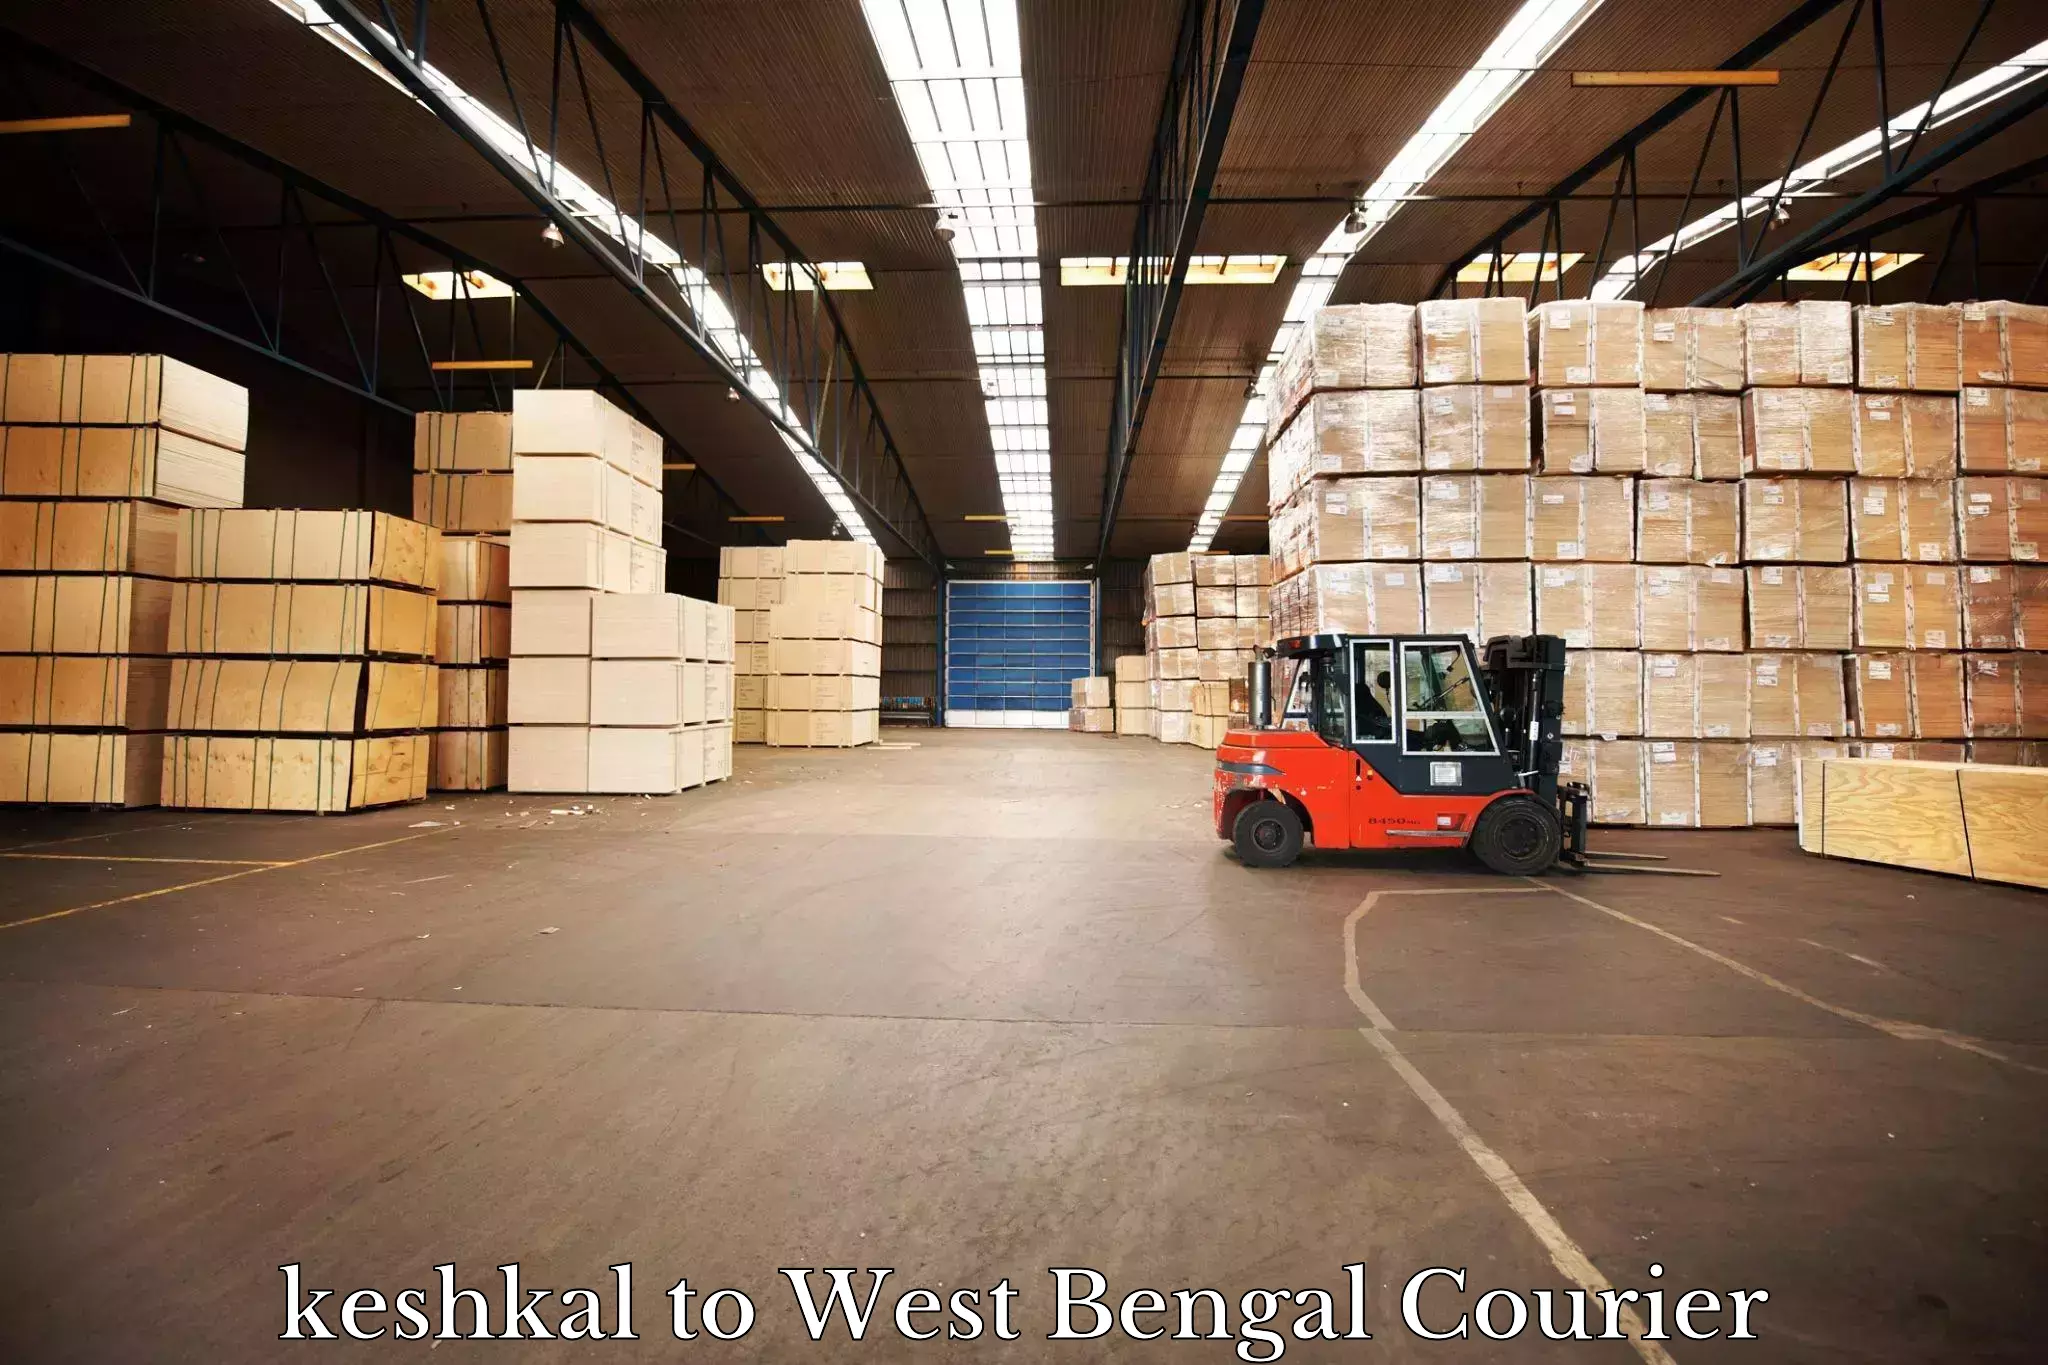 Global logistics network keshkal to West Bengal